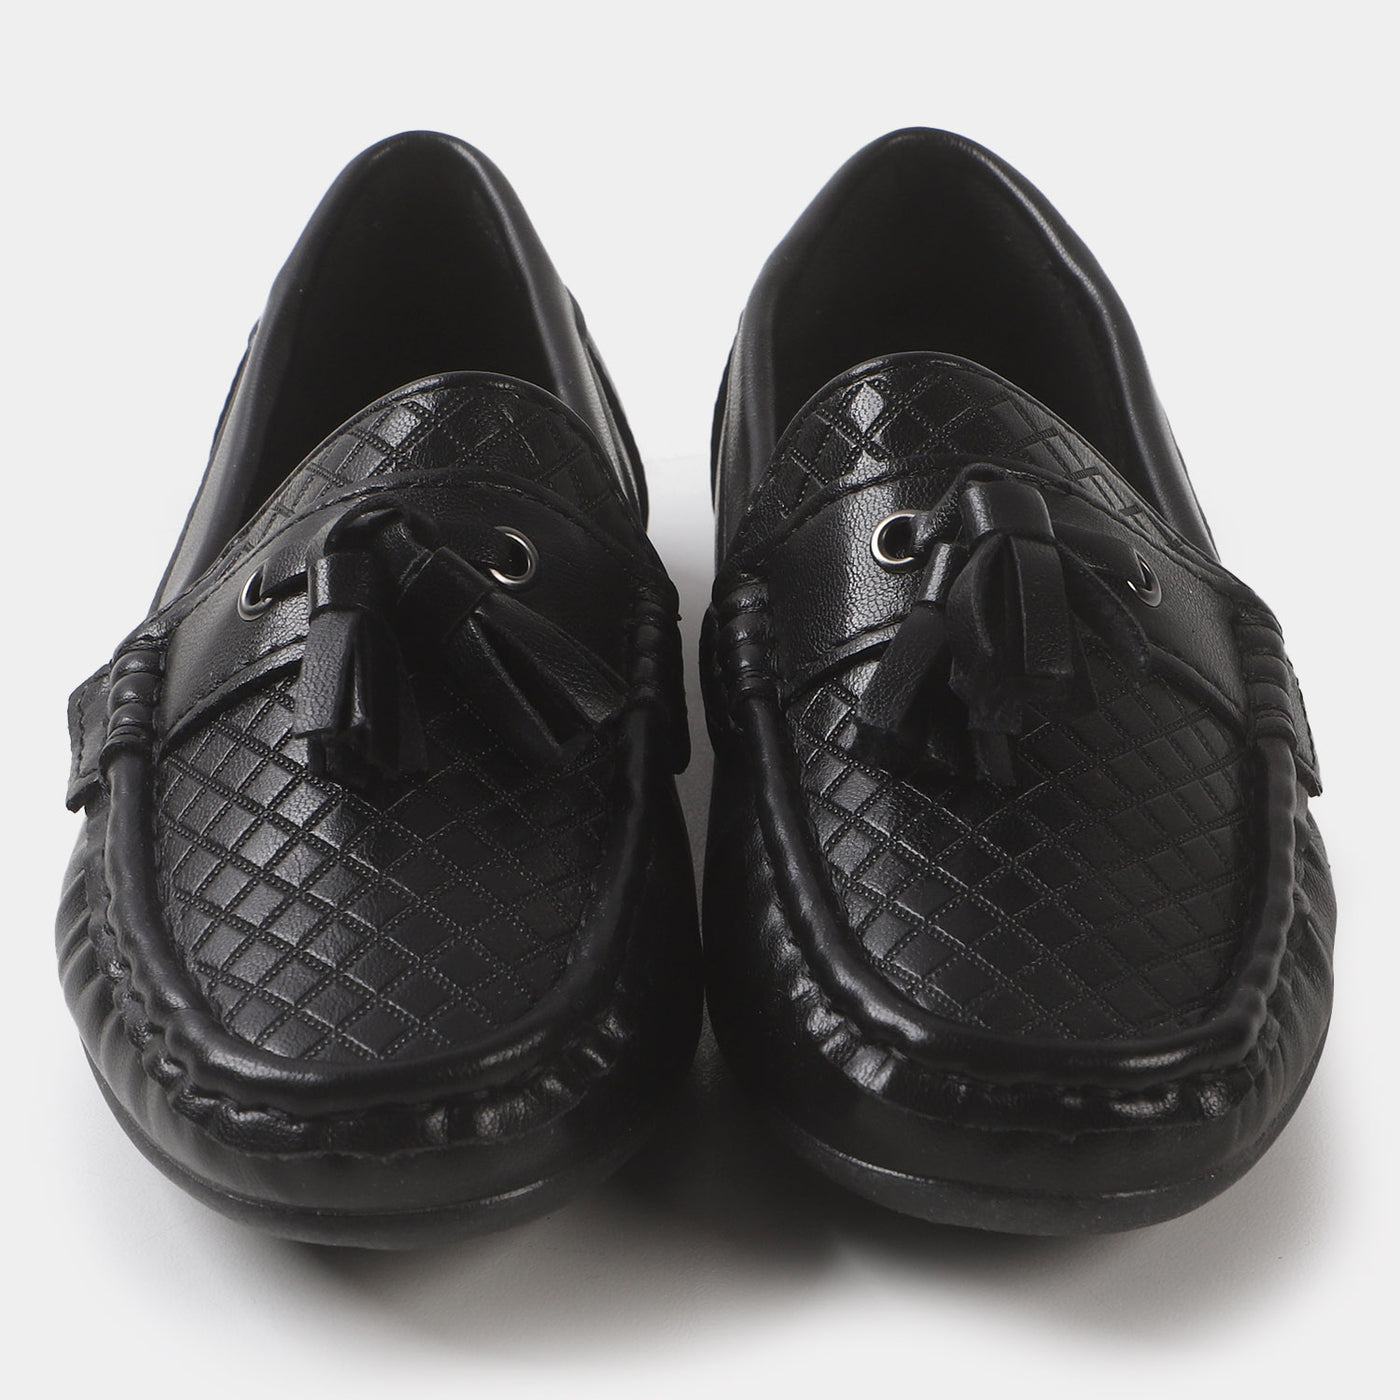 Boys loafers 202109-5 - BLACK